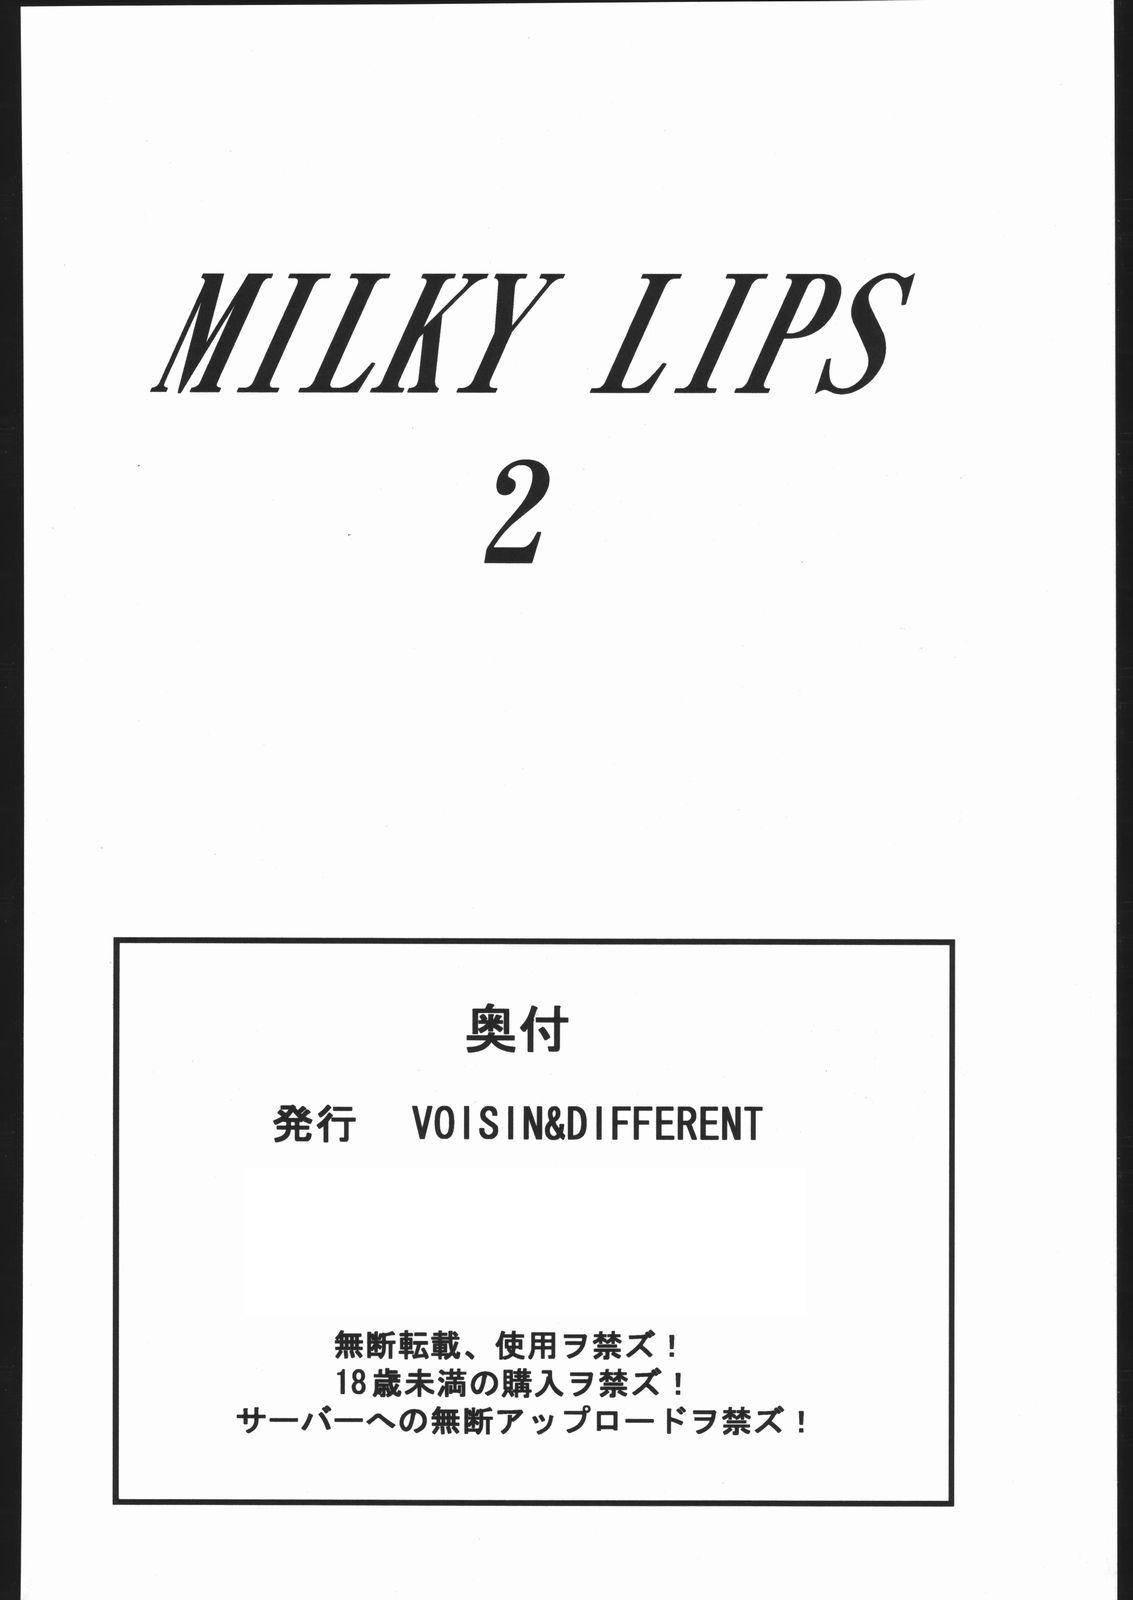 MILKY LIPS 2 62